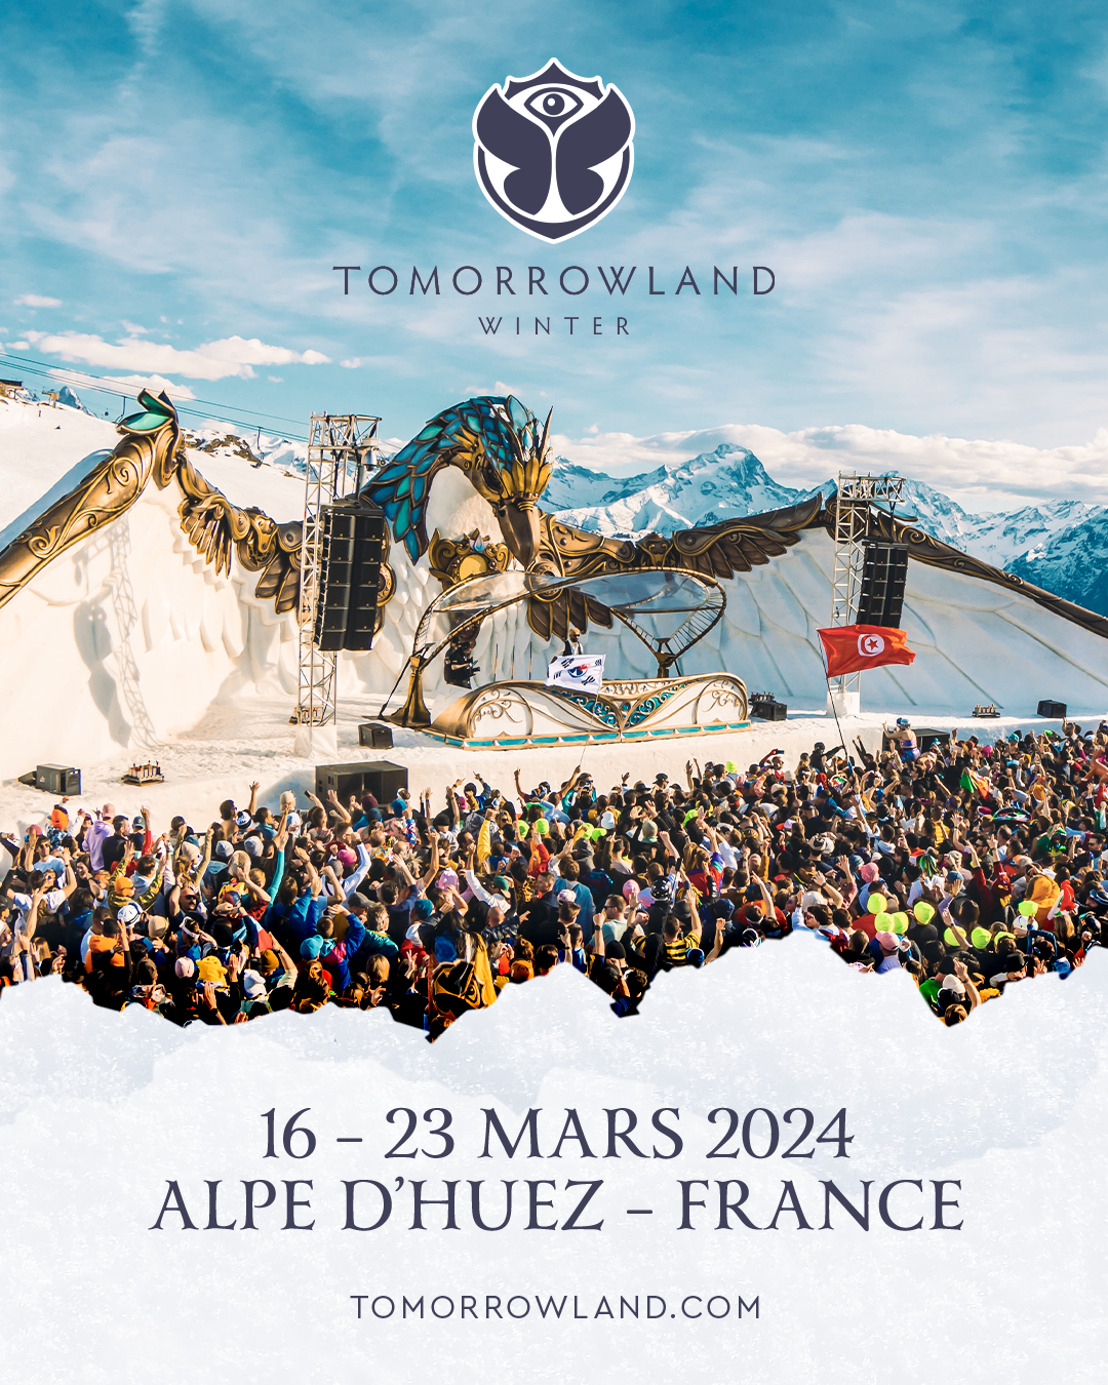 Tomorrowland Winter returns to the breathtaking ski resort Alpe d’Huez 